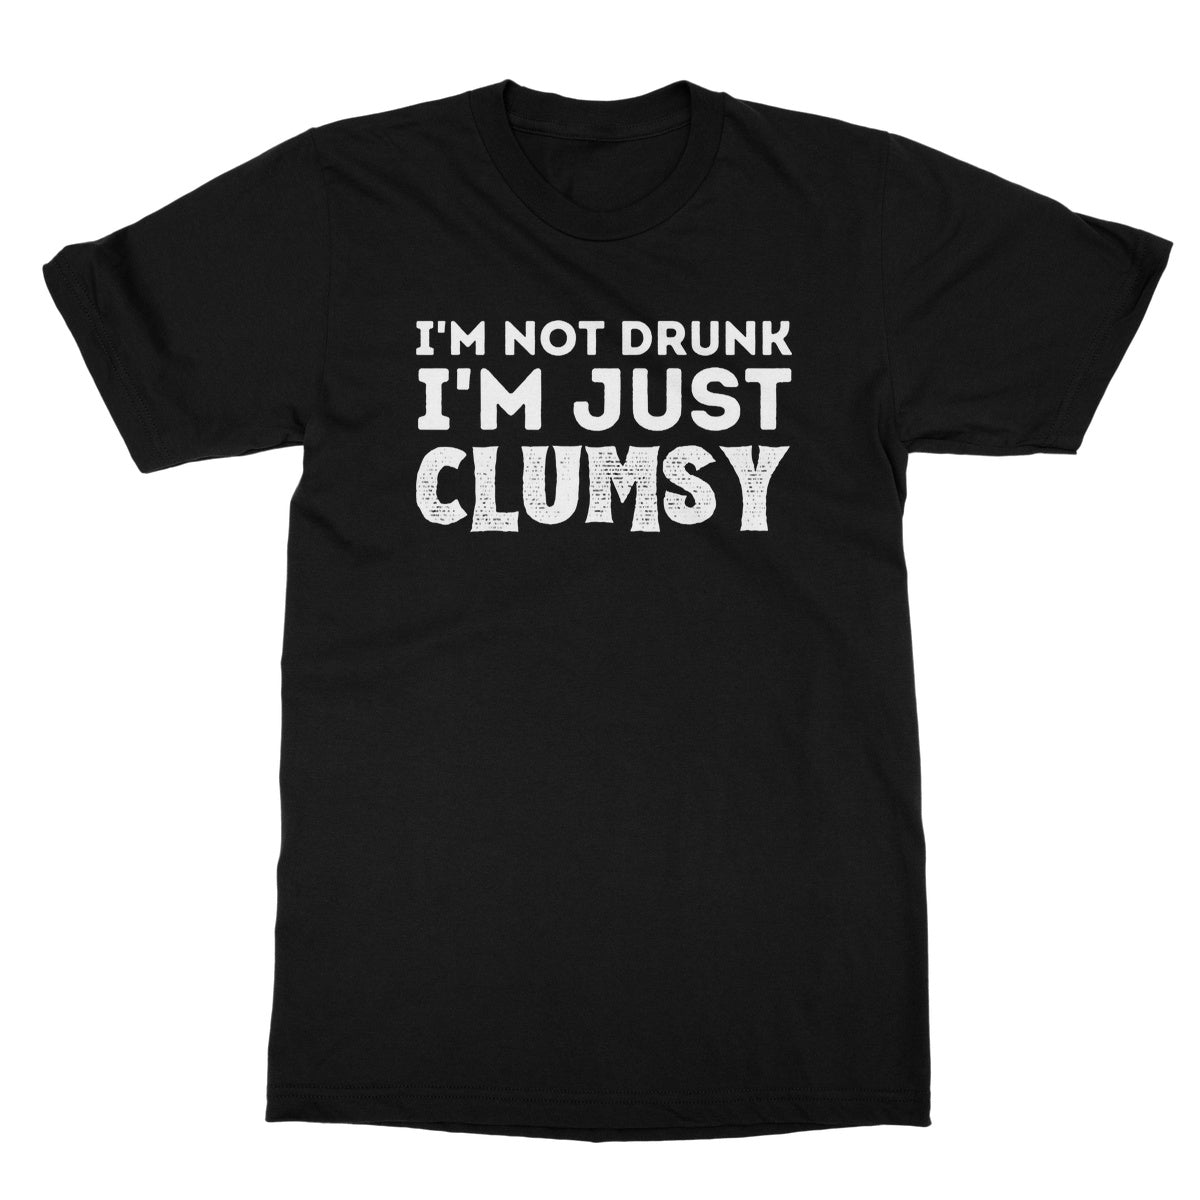 I'm not drunk I'm just clumsy t shirt black